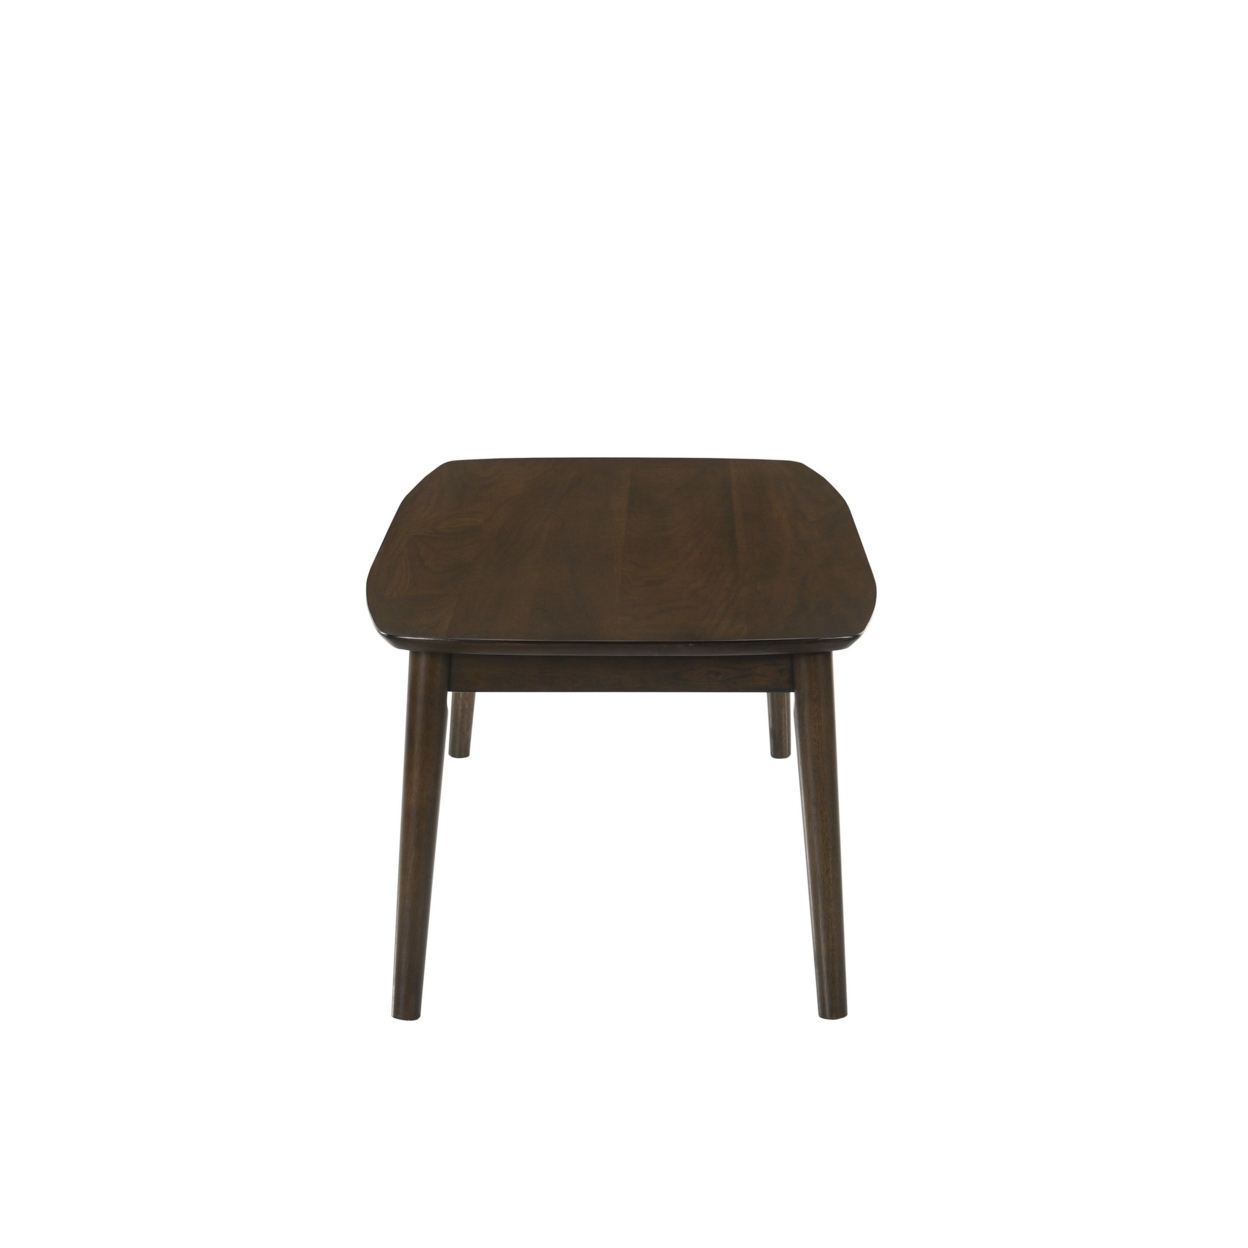 Lexi 47 Inch Coffee Table, Dark Walnut Brown Wood, Rounded Splayed Legs- Saltoro Sherpi